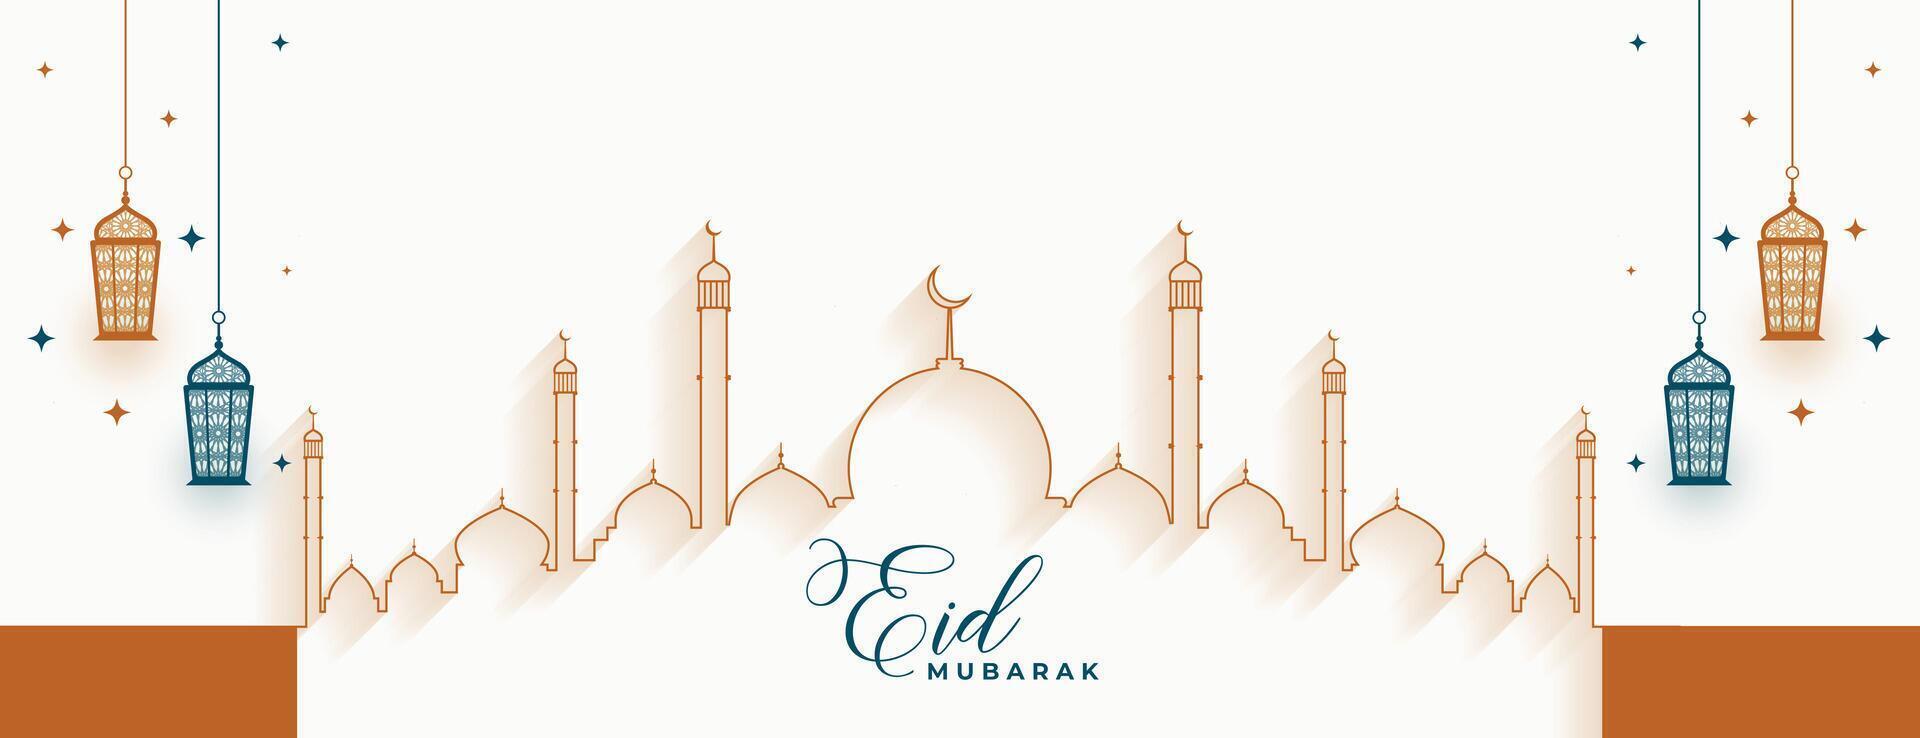 elegante muçulmano festival eid Mubarak poster com linha estilo mesquita vetor